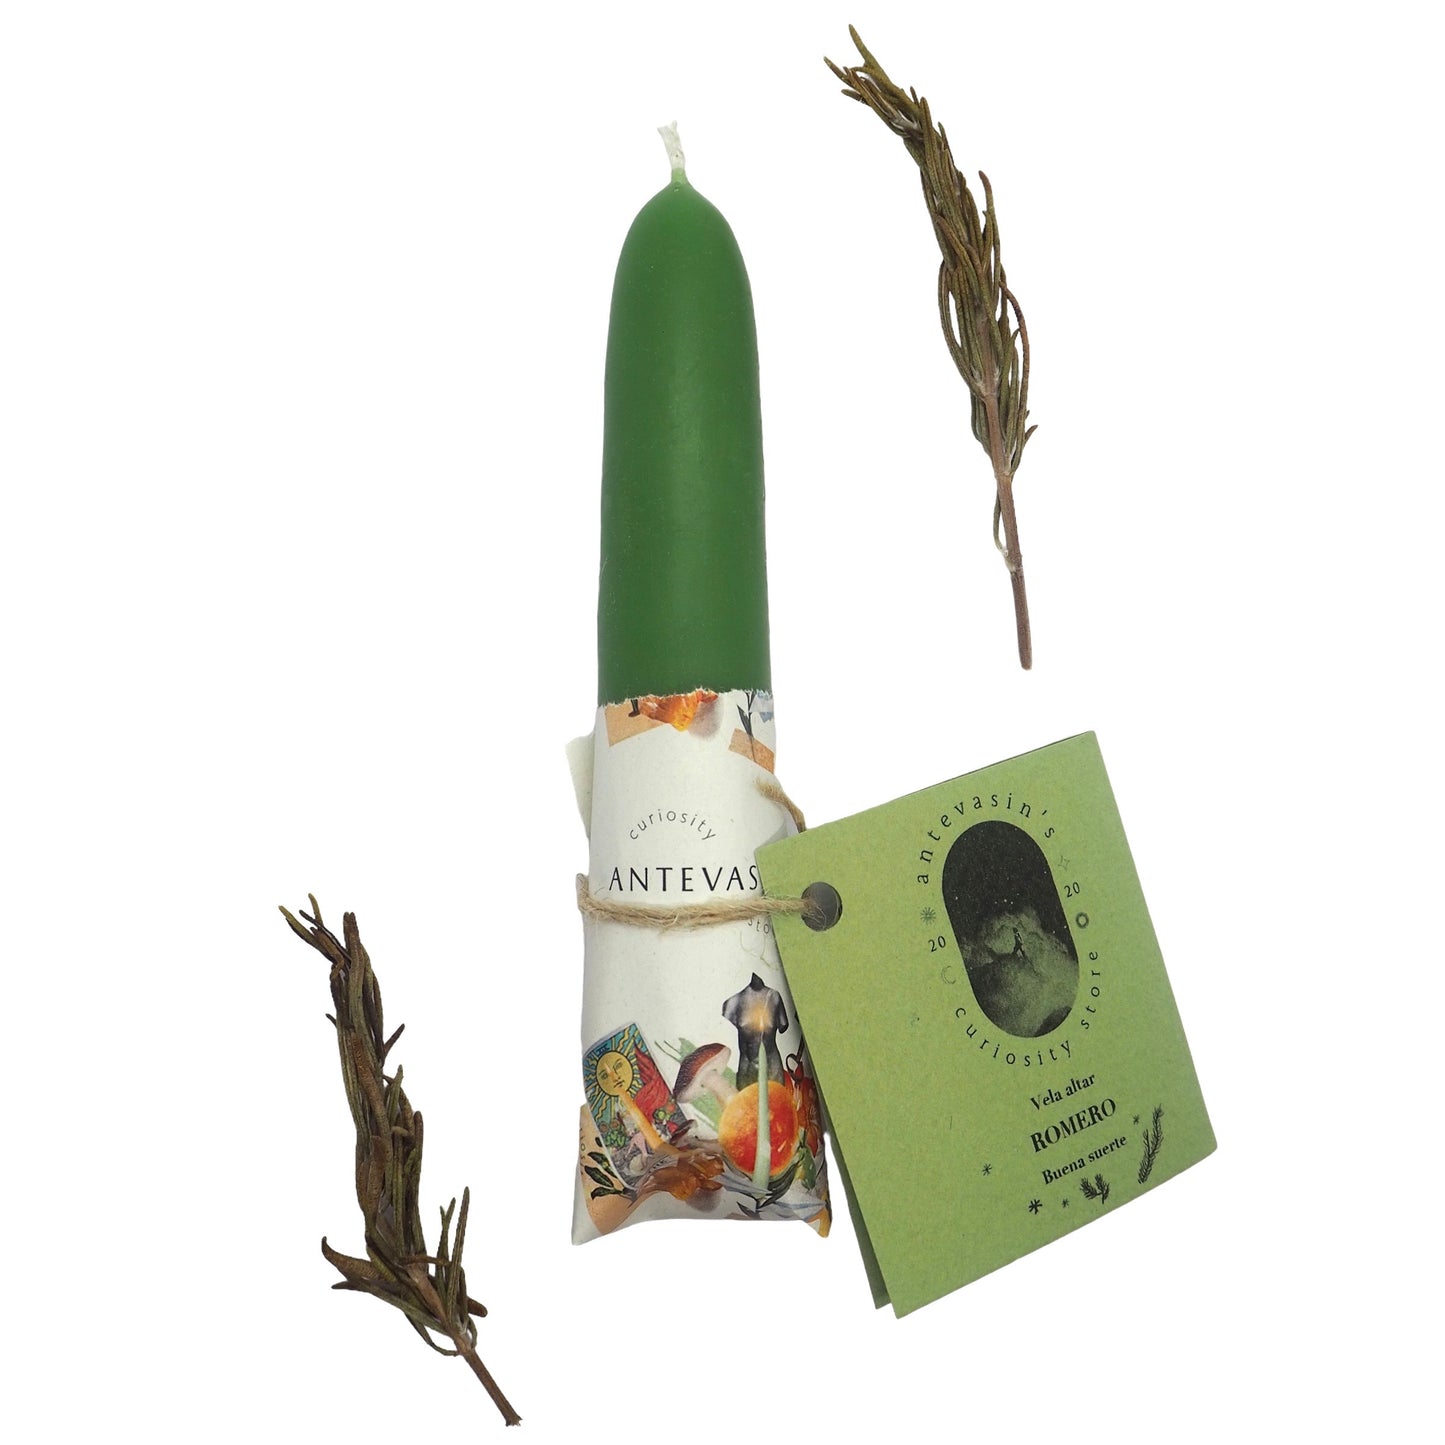 Vela ritual verde ROMERO (Salud y Buena suerte)  40gr x 13cm